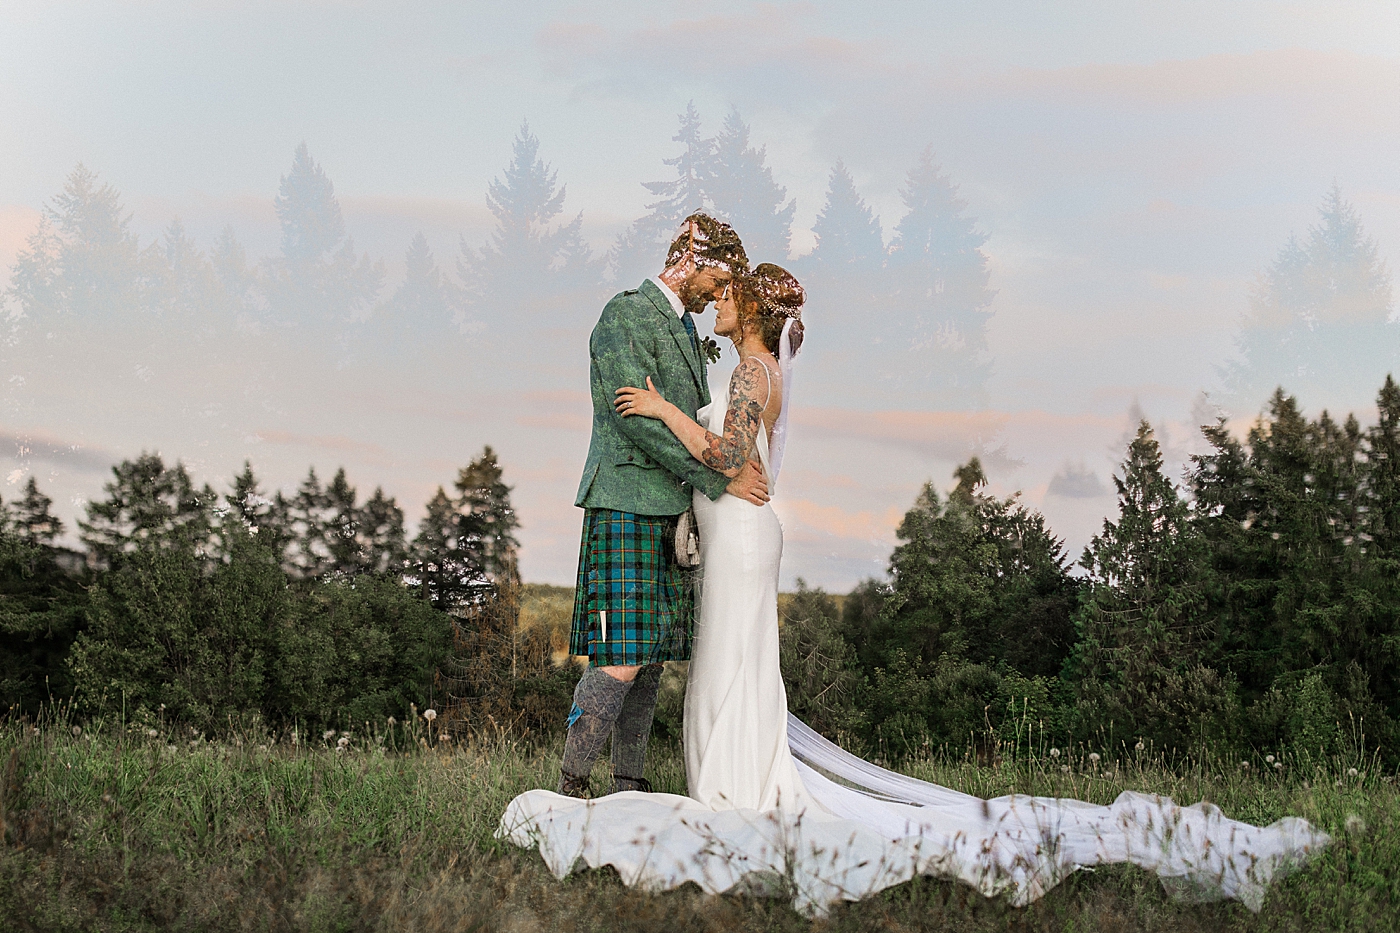 Sunset bride and groom wedding portraits | Chehalis Wedding Photographer, Megan Montalvo Photography